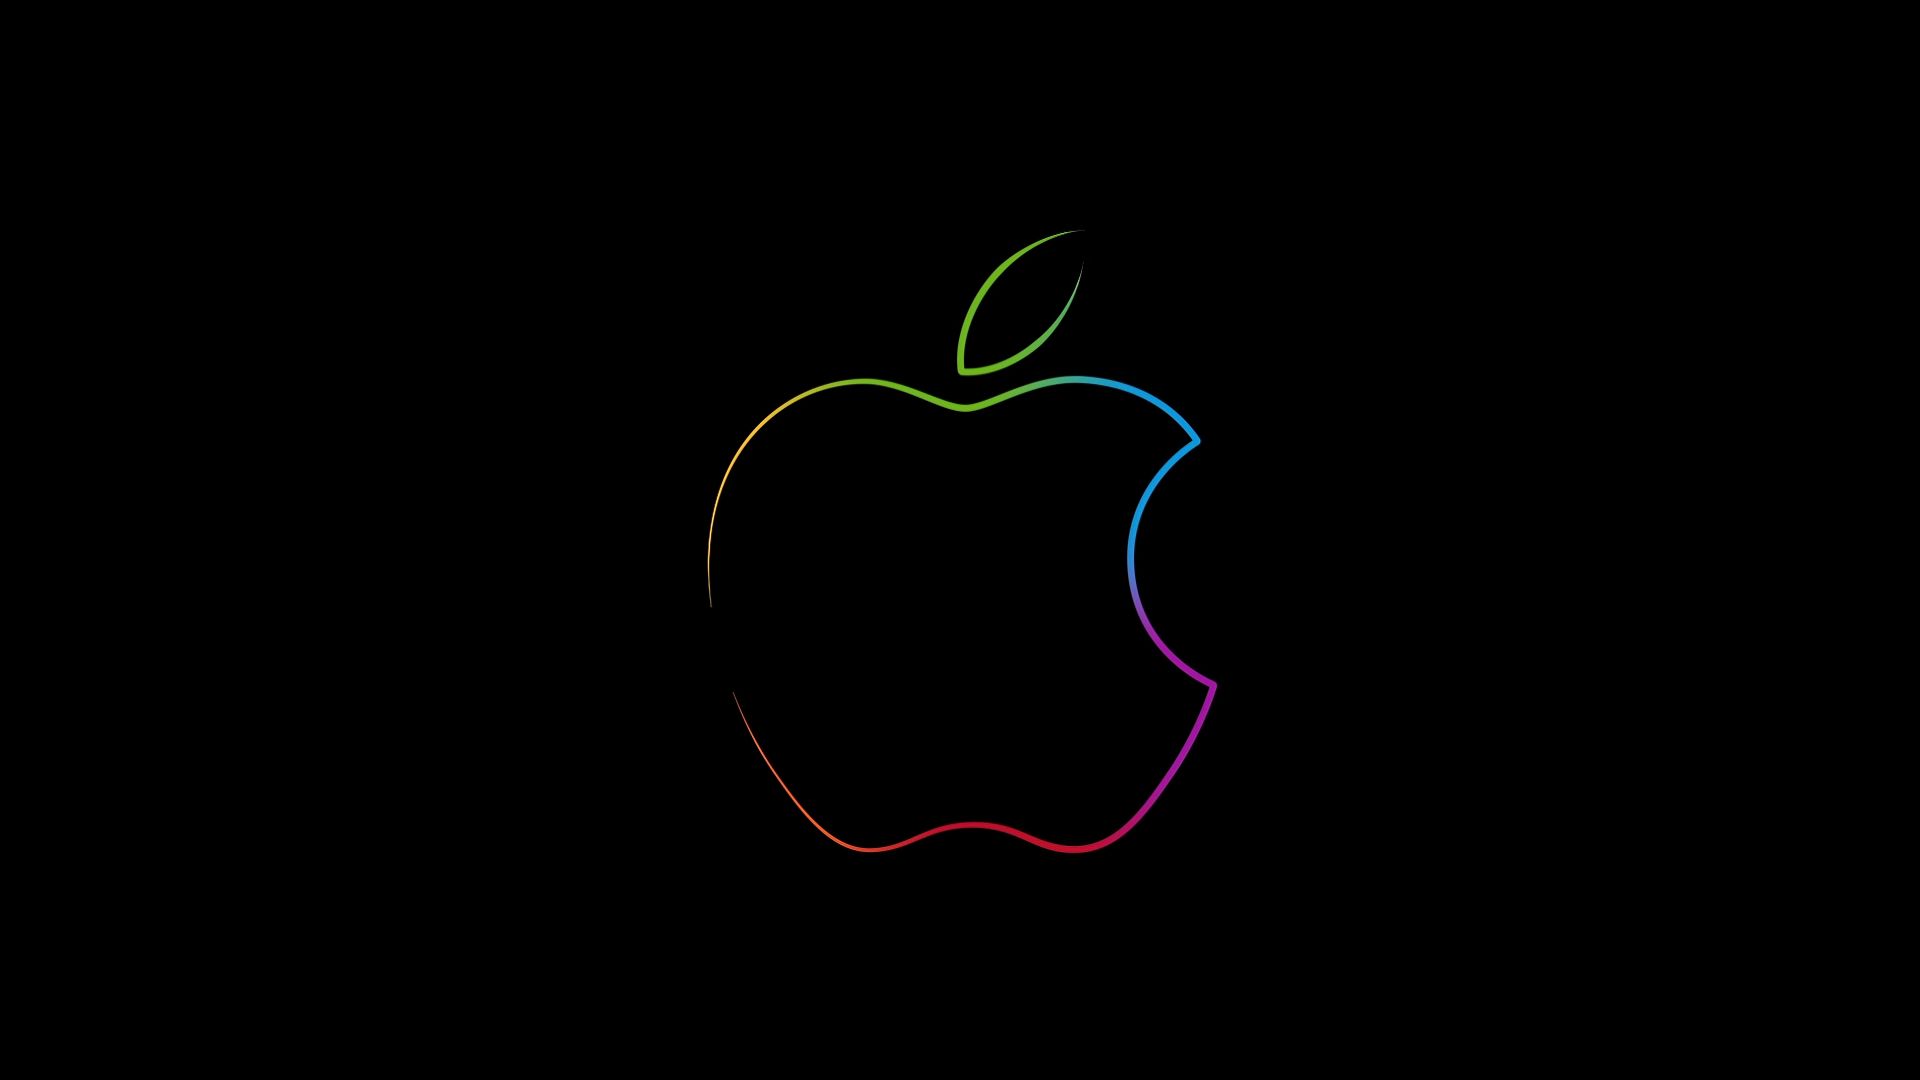 Apple October 2020 Event, 4K (horizontal)